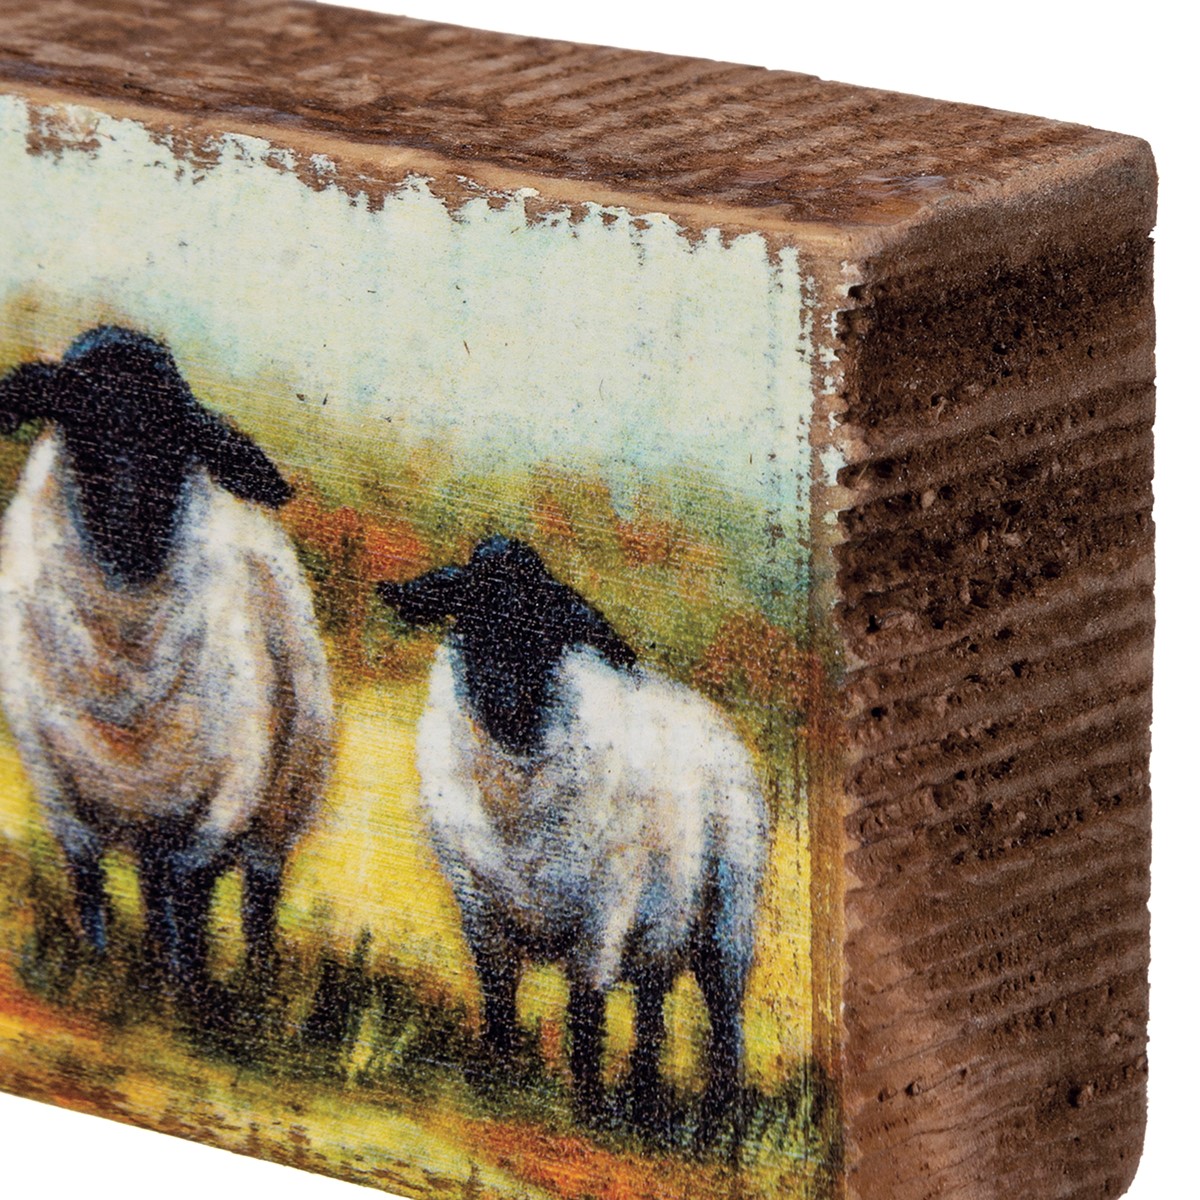 Block Sign - Sheep - 3.50" x 2" x 1" - Wood